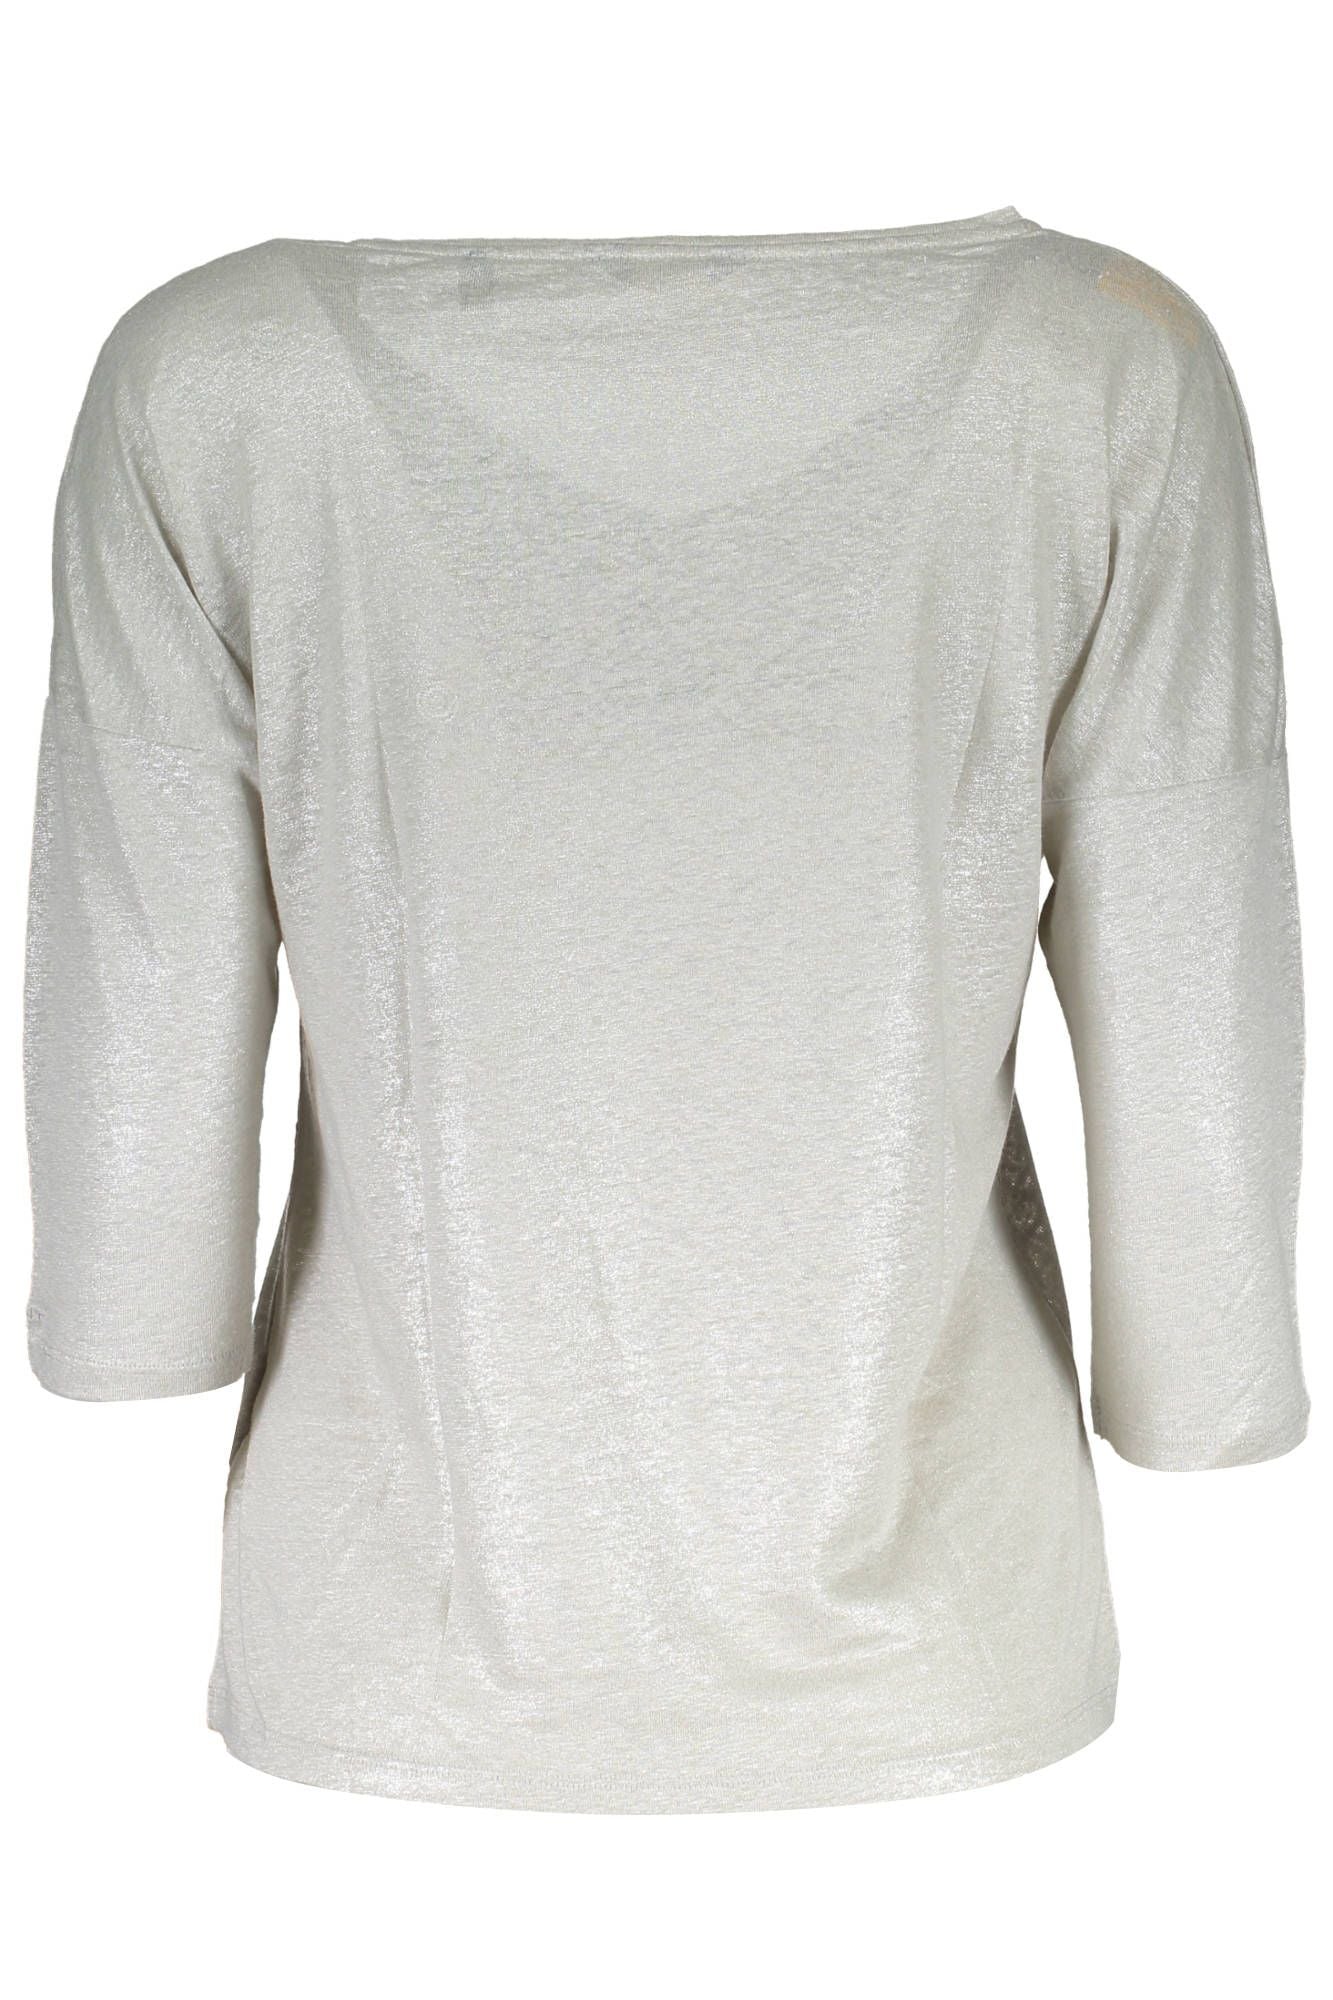 Elegant Gray V-Neck Sweater with 3/4 Sleeves